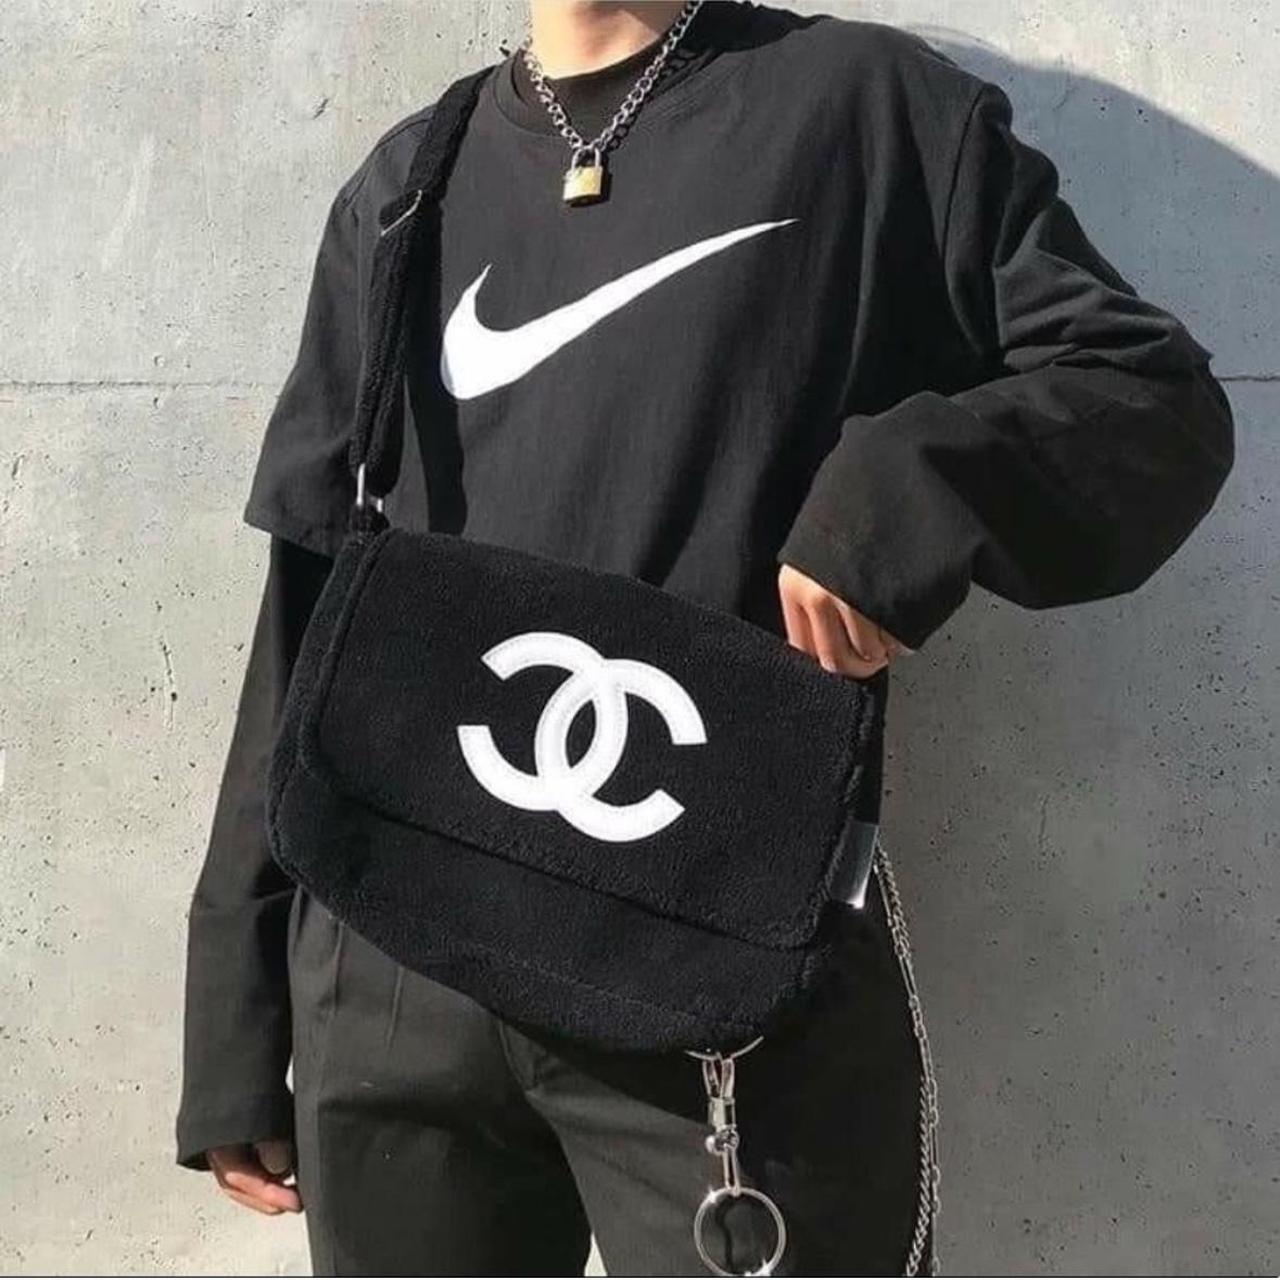 Pretty crosssbody bag from Chanel VIP gift. Makes an - Depop